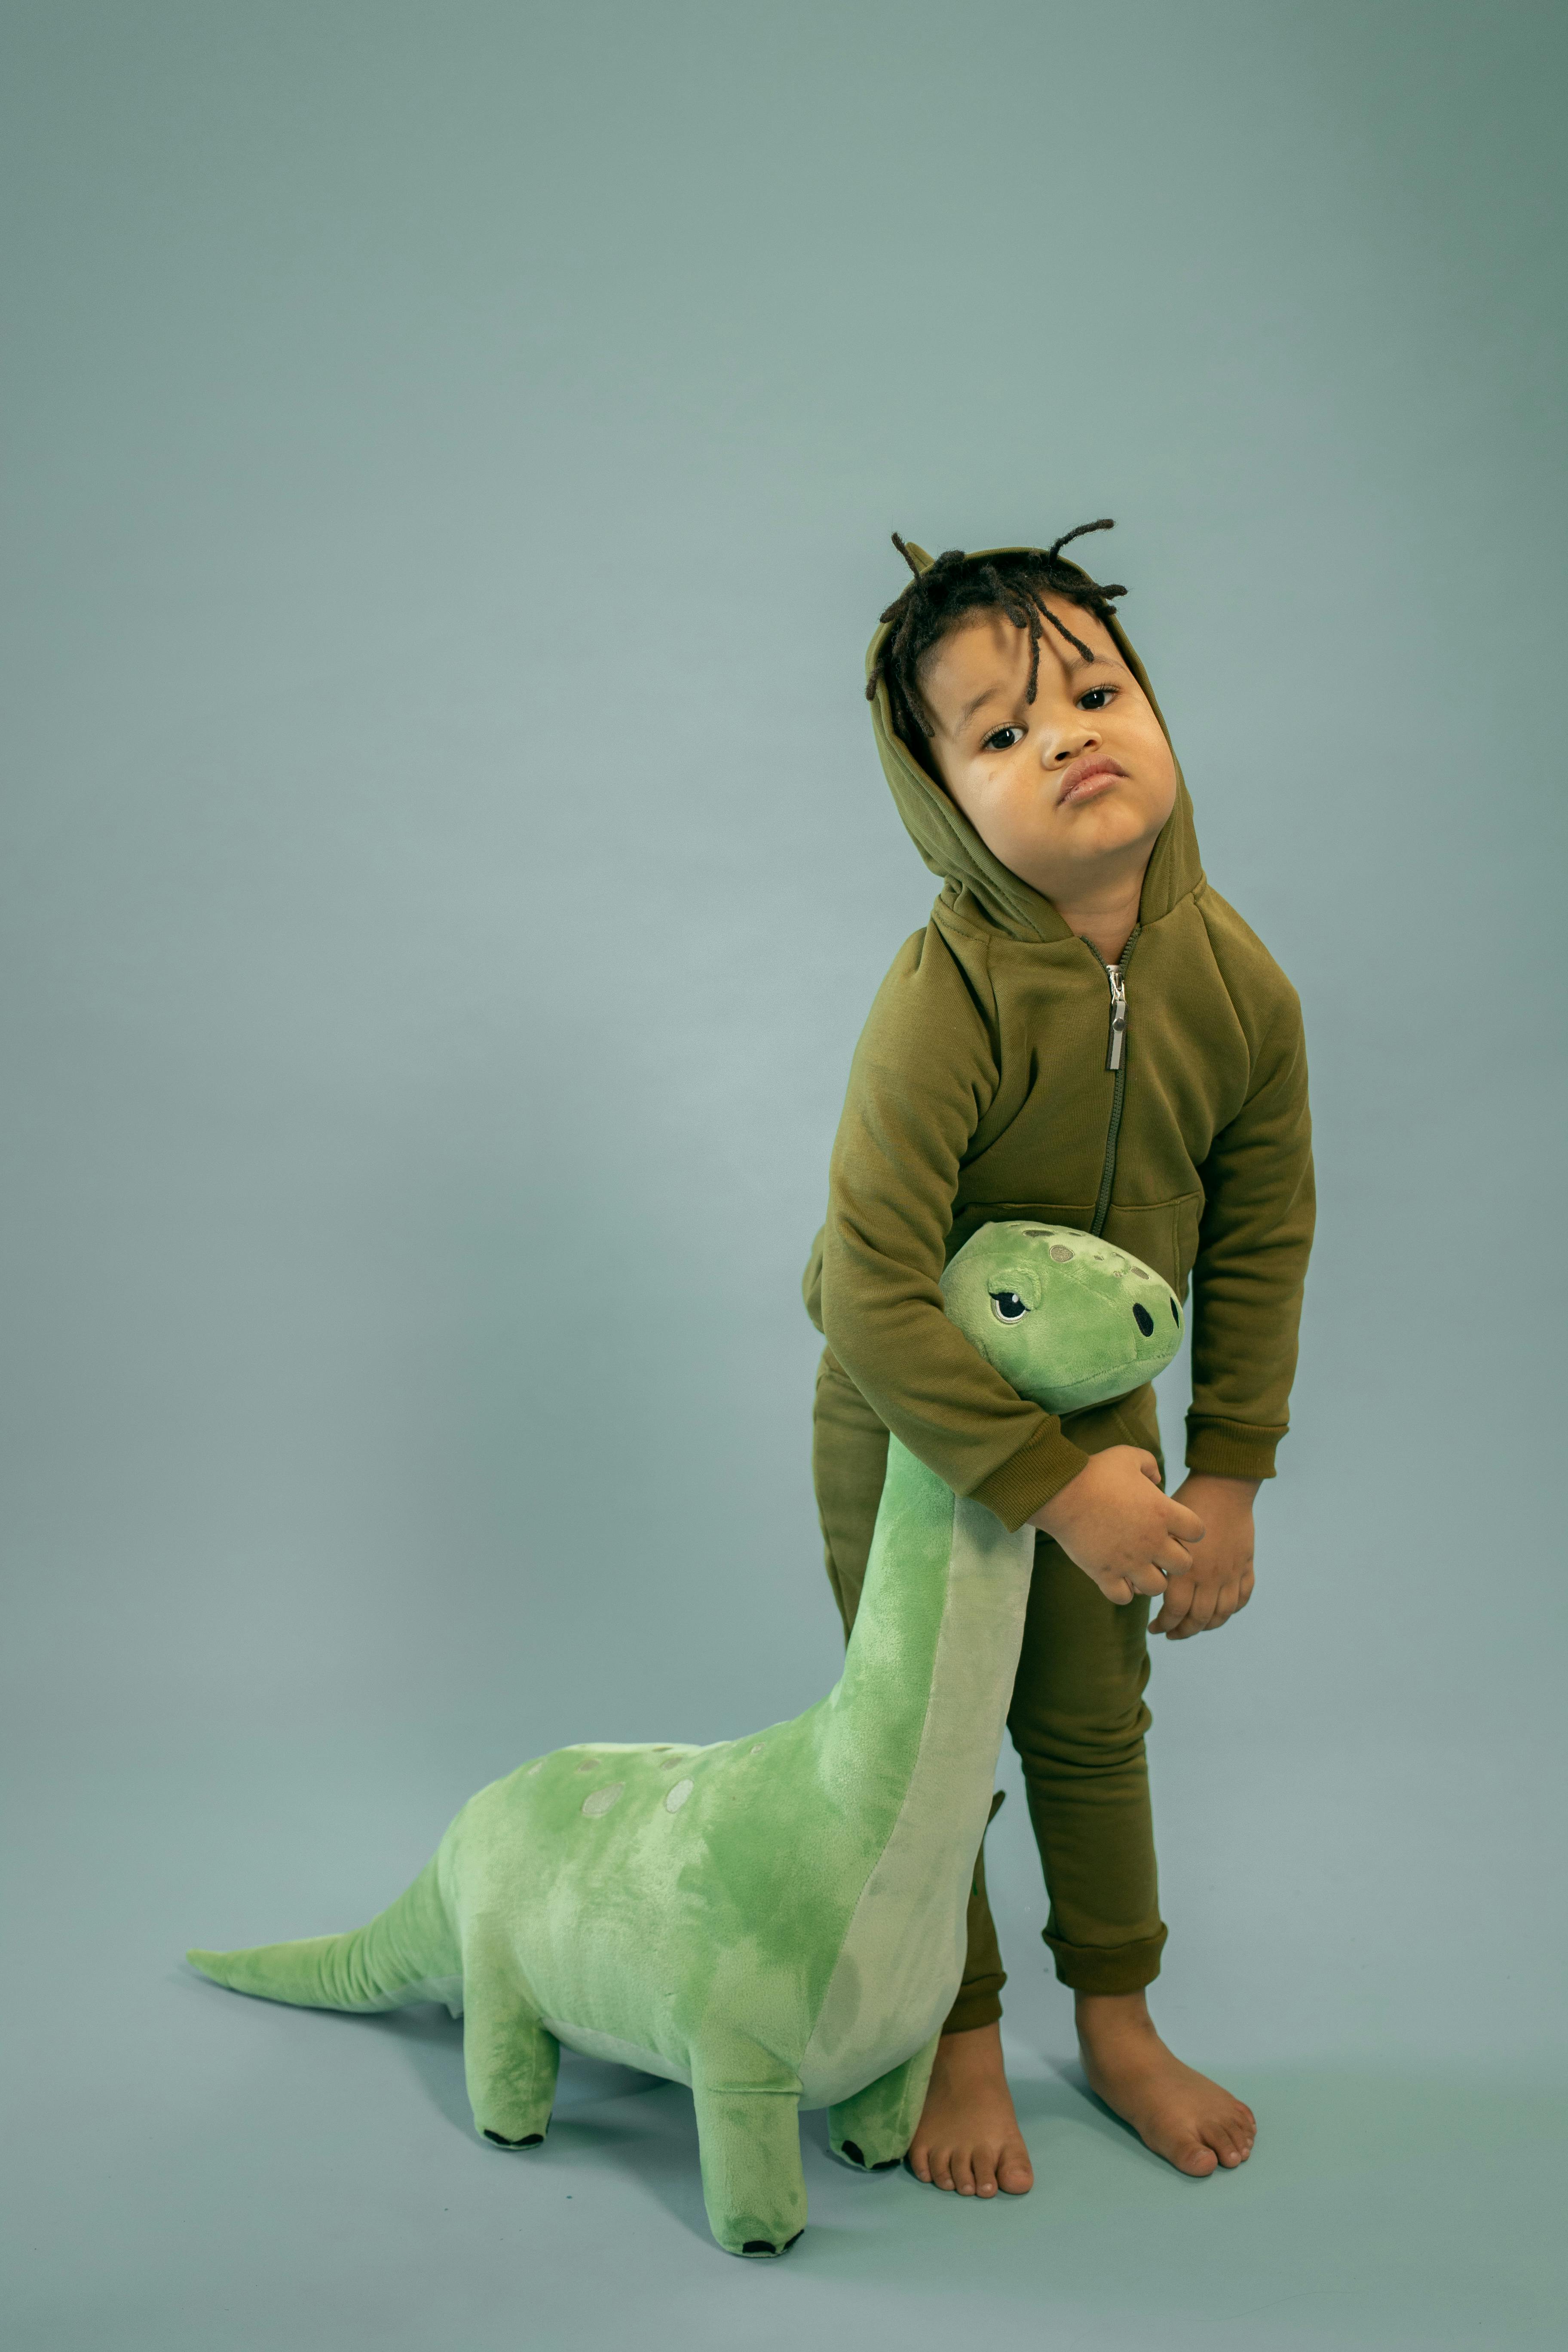 bored black boy embracing toy dinosaur on gray background